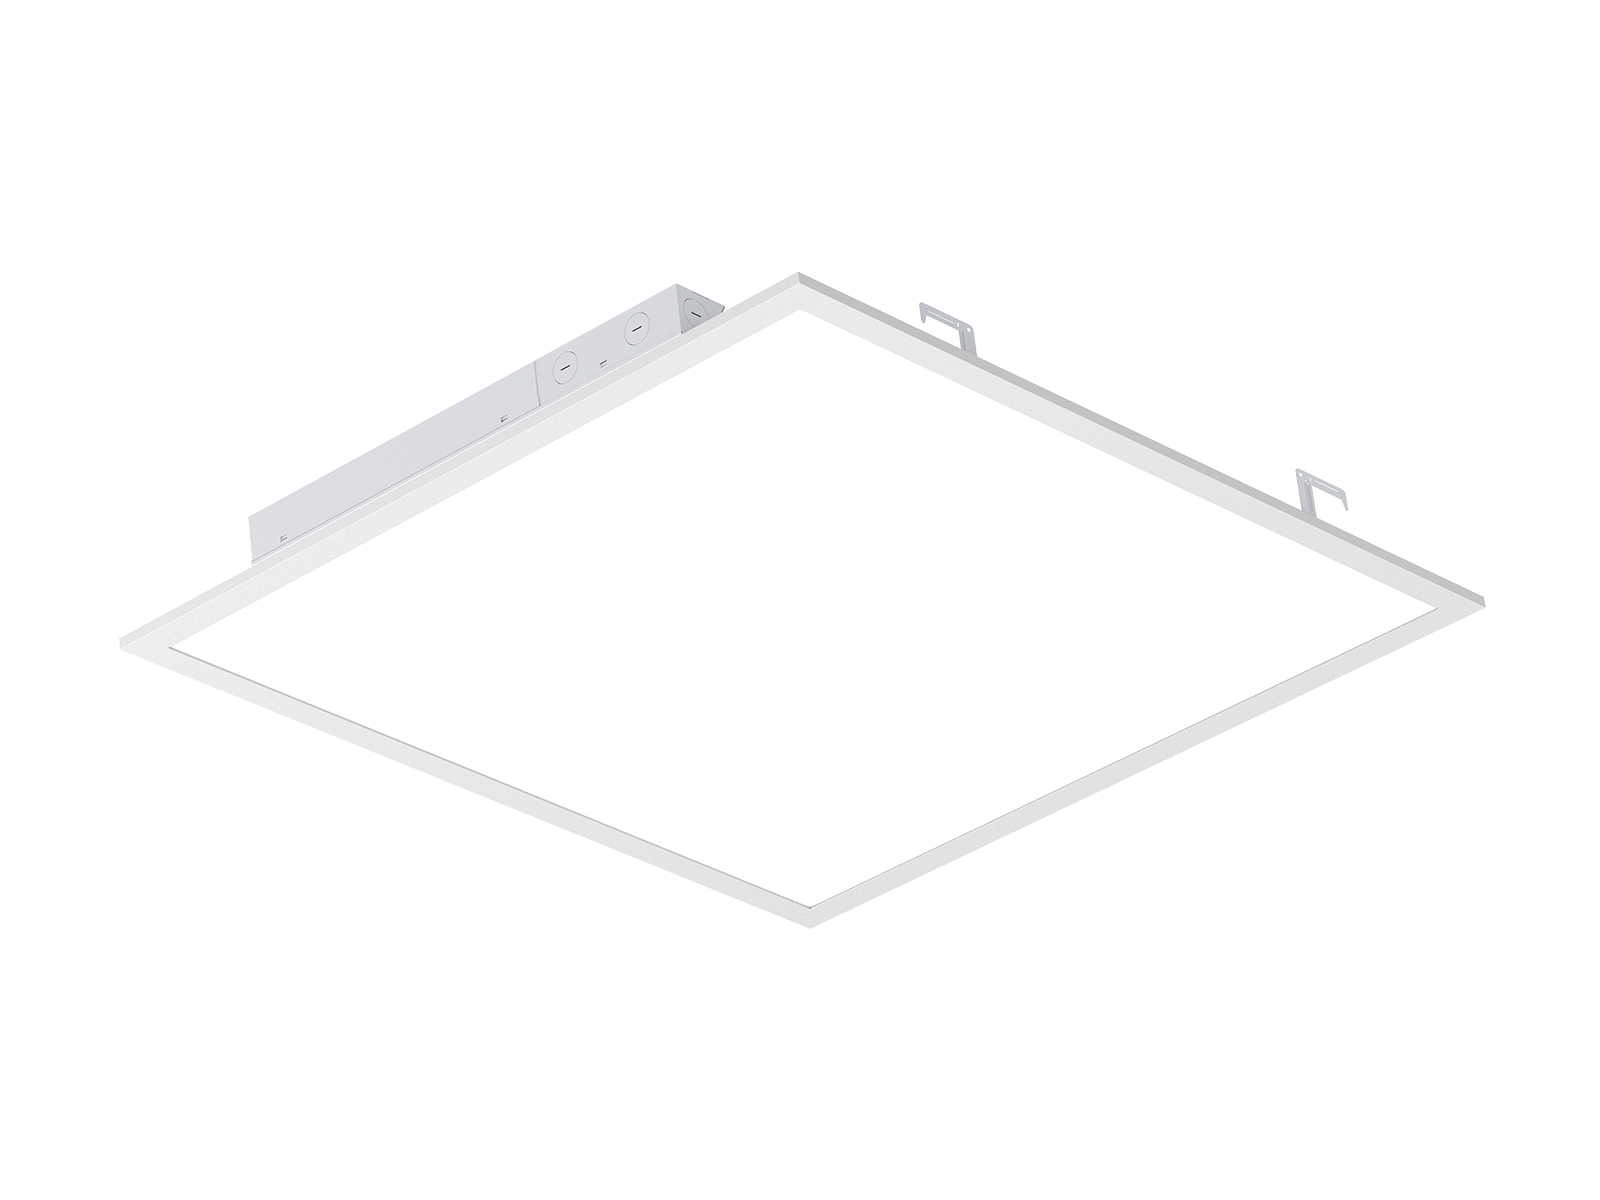 PL-CK LED 60x60 Office Ceiling Flat Panel Light